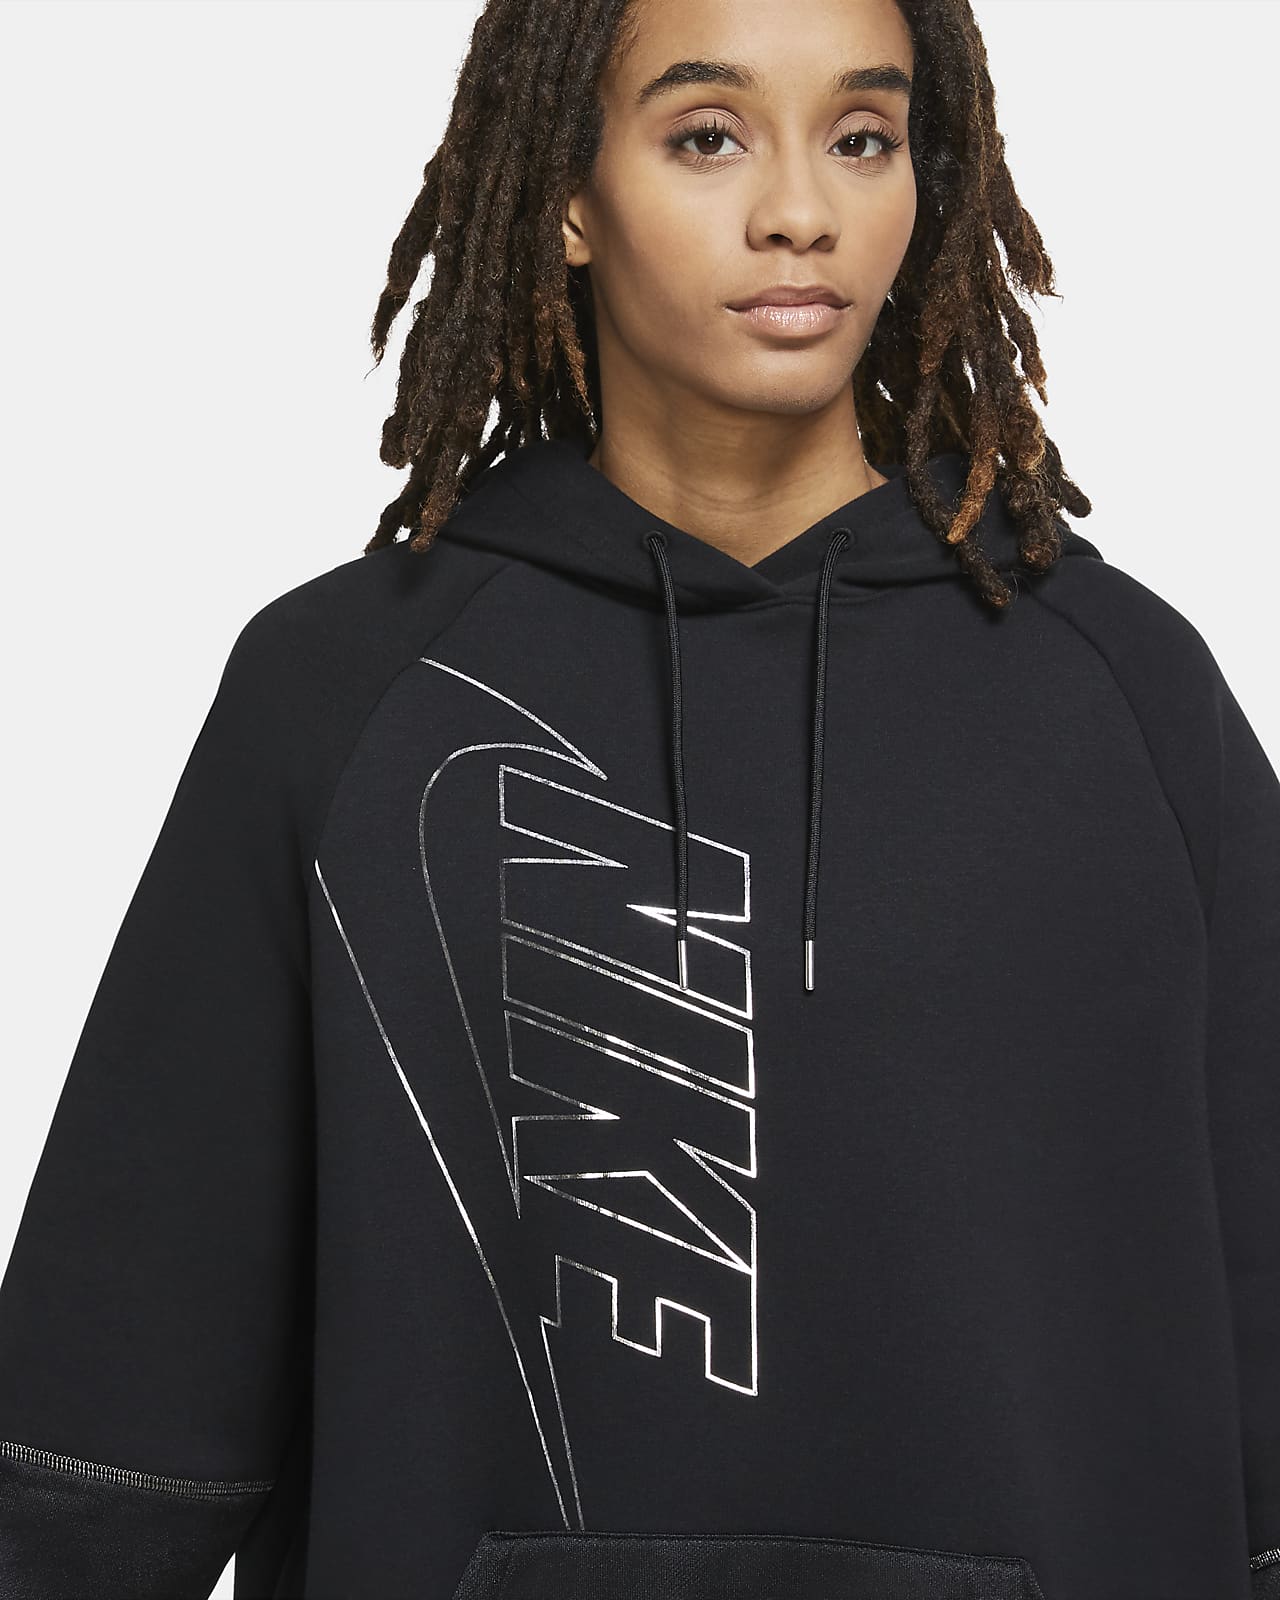 nike women's fleece hoodie